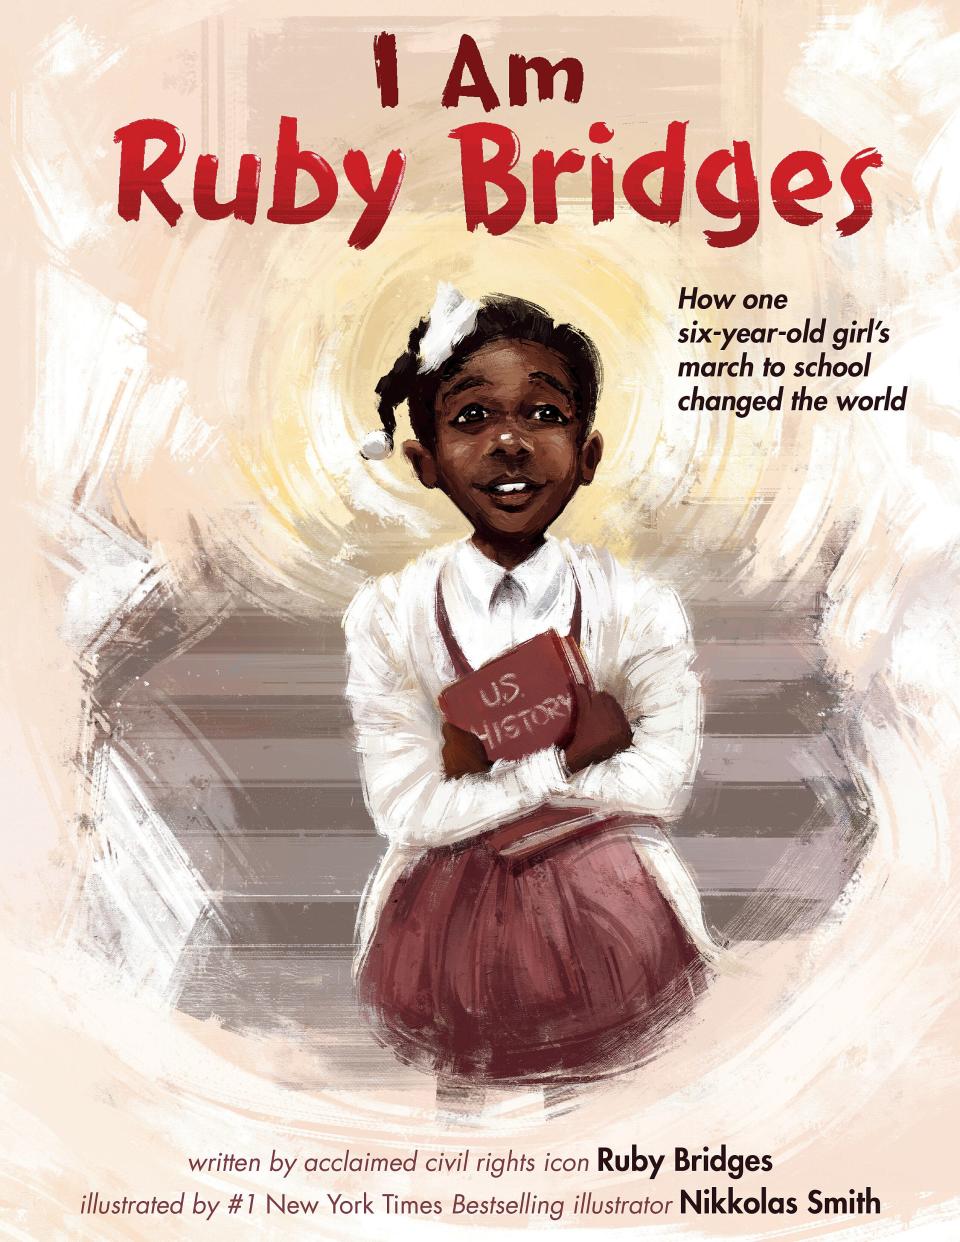 "I Am Ruby Bridges" by Ruby Bridges cover art.